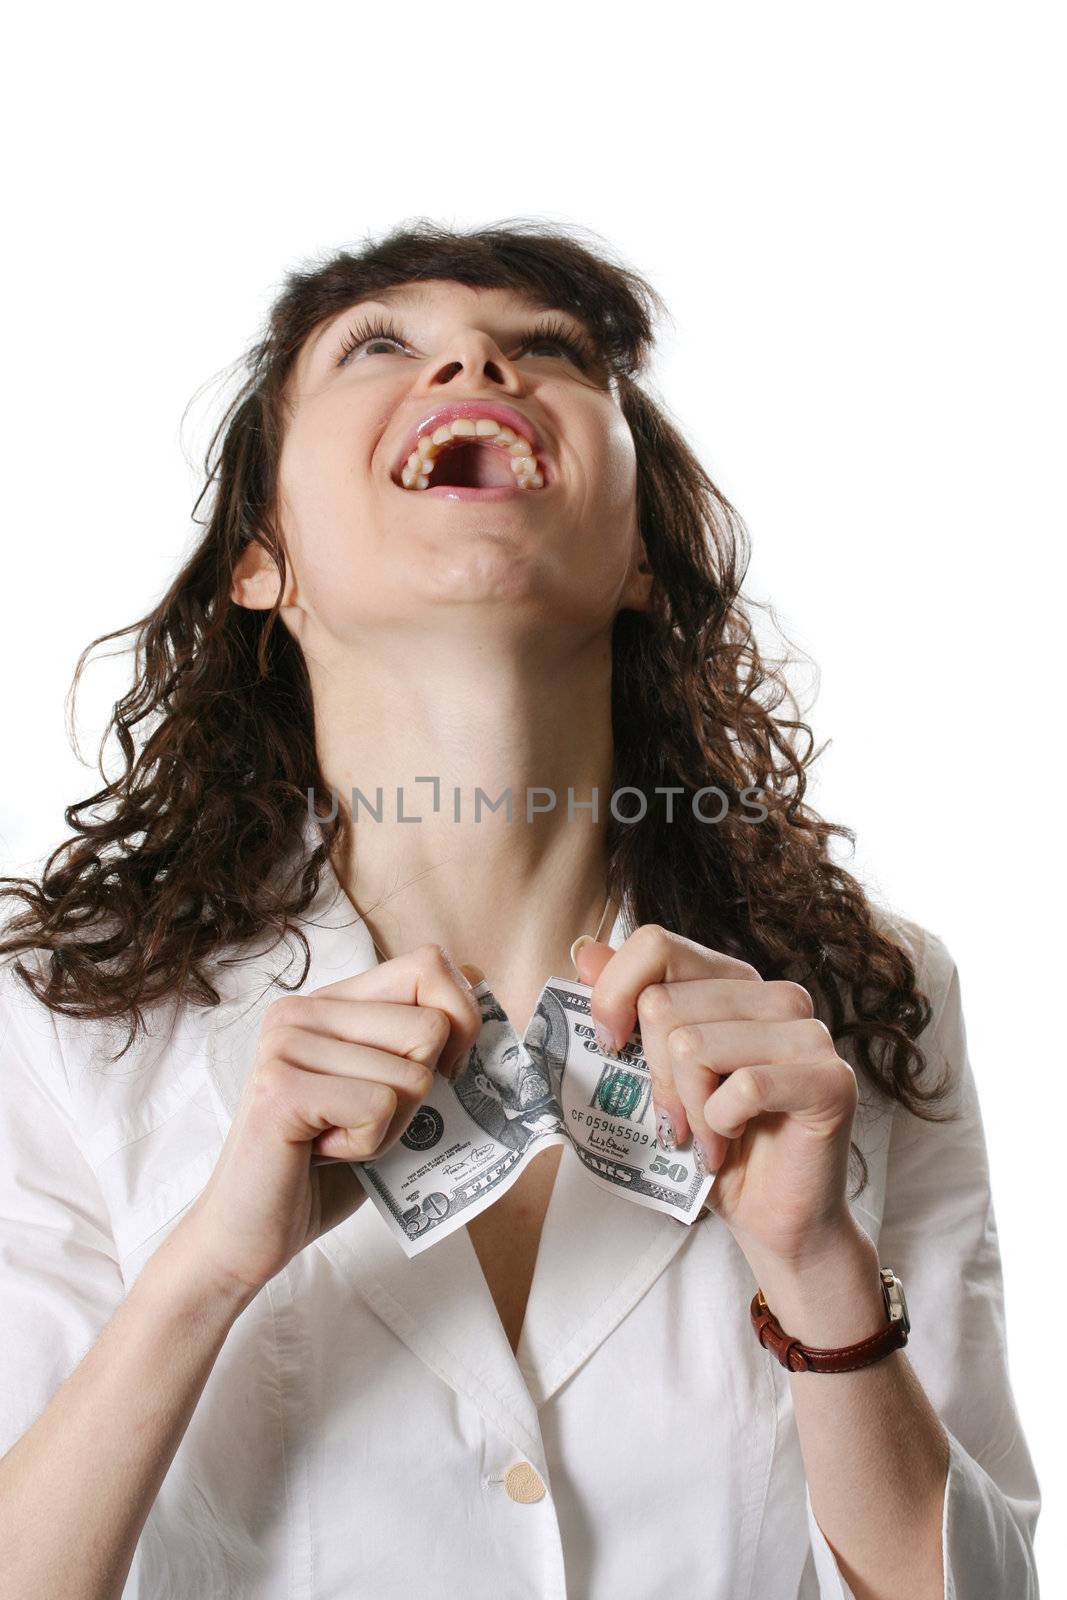 The nice woman tears 50 dollar denomination